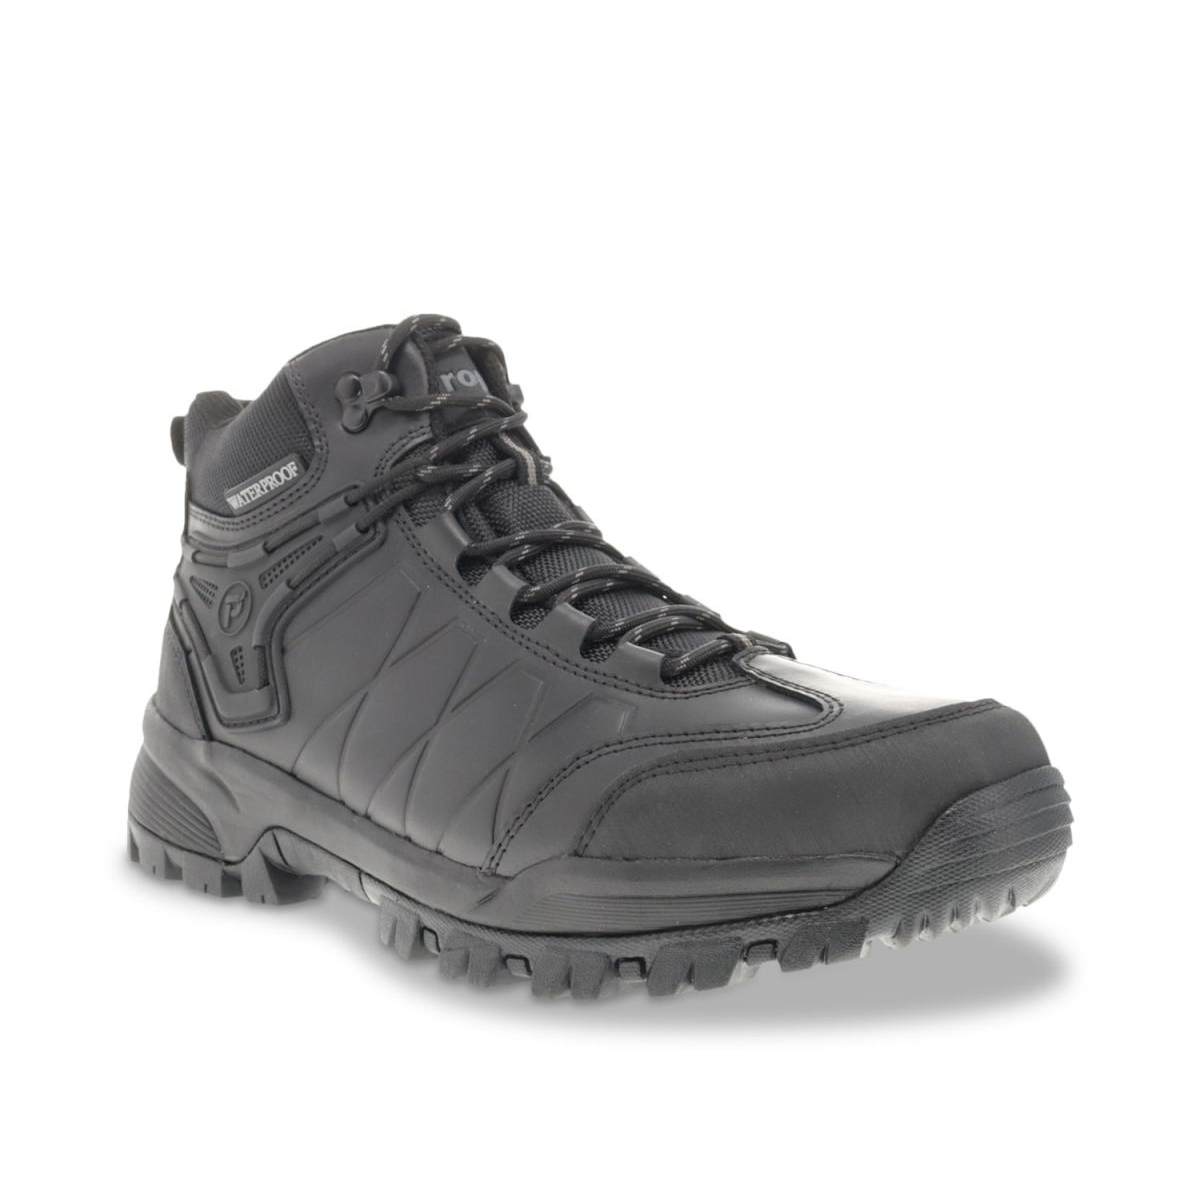 Propet Men's Ridge Walker Force Hiking Boots Black - MBA052LBLK BLACK - BLACK, 8 Wide